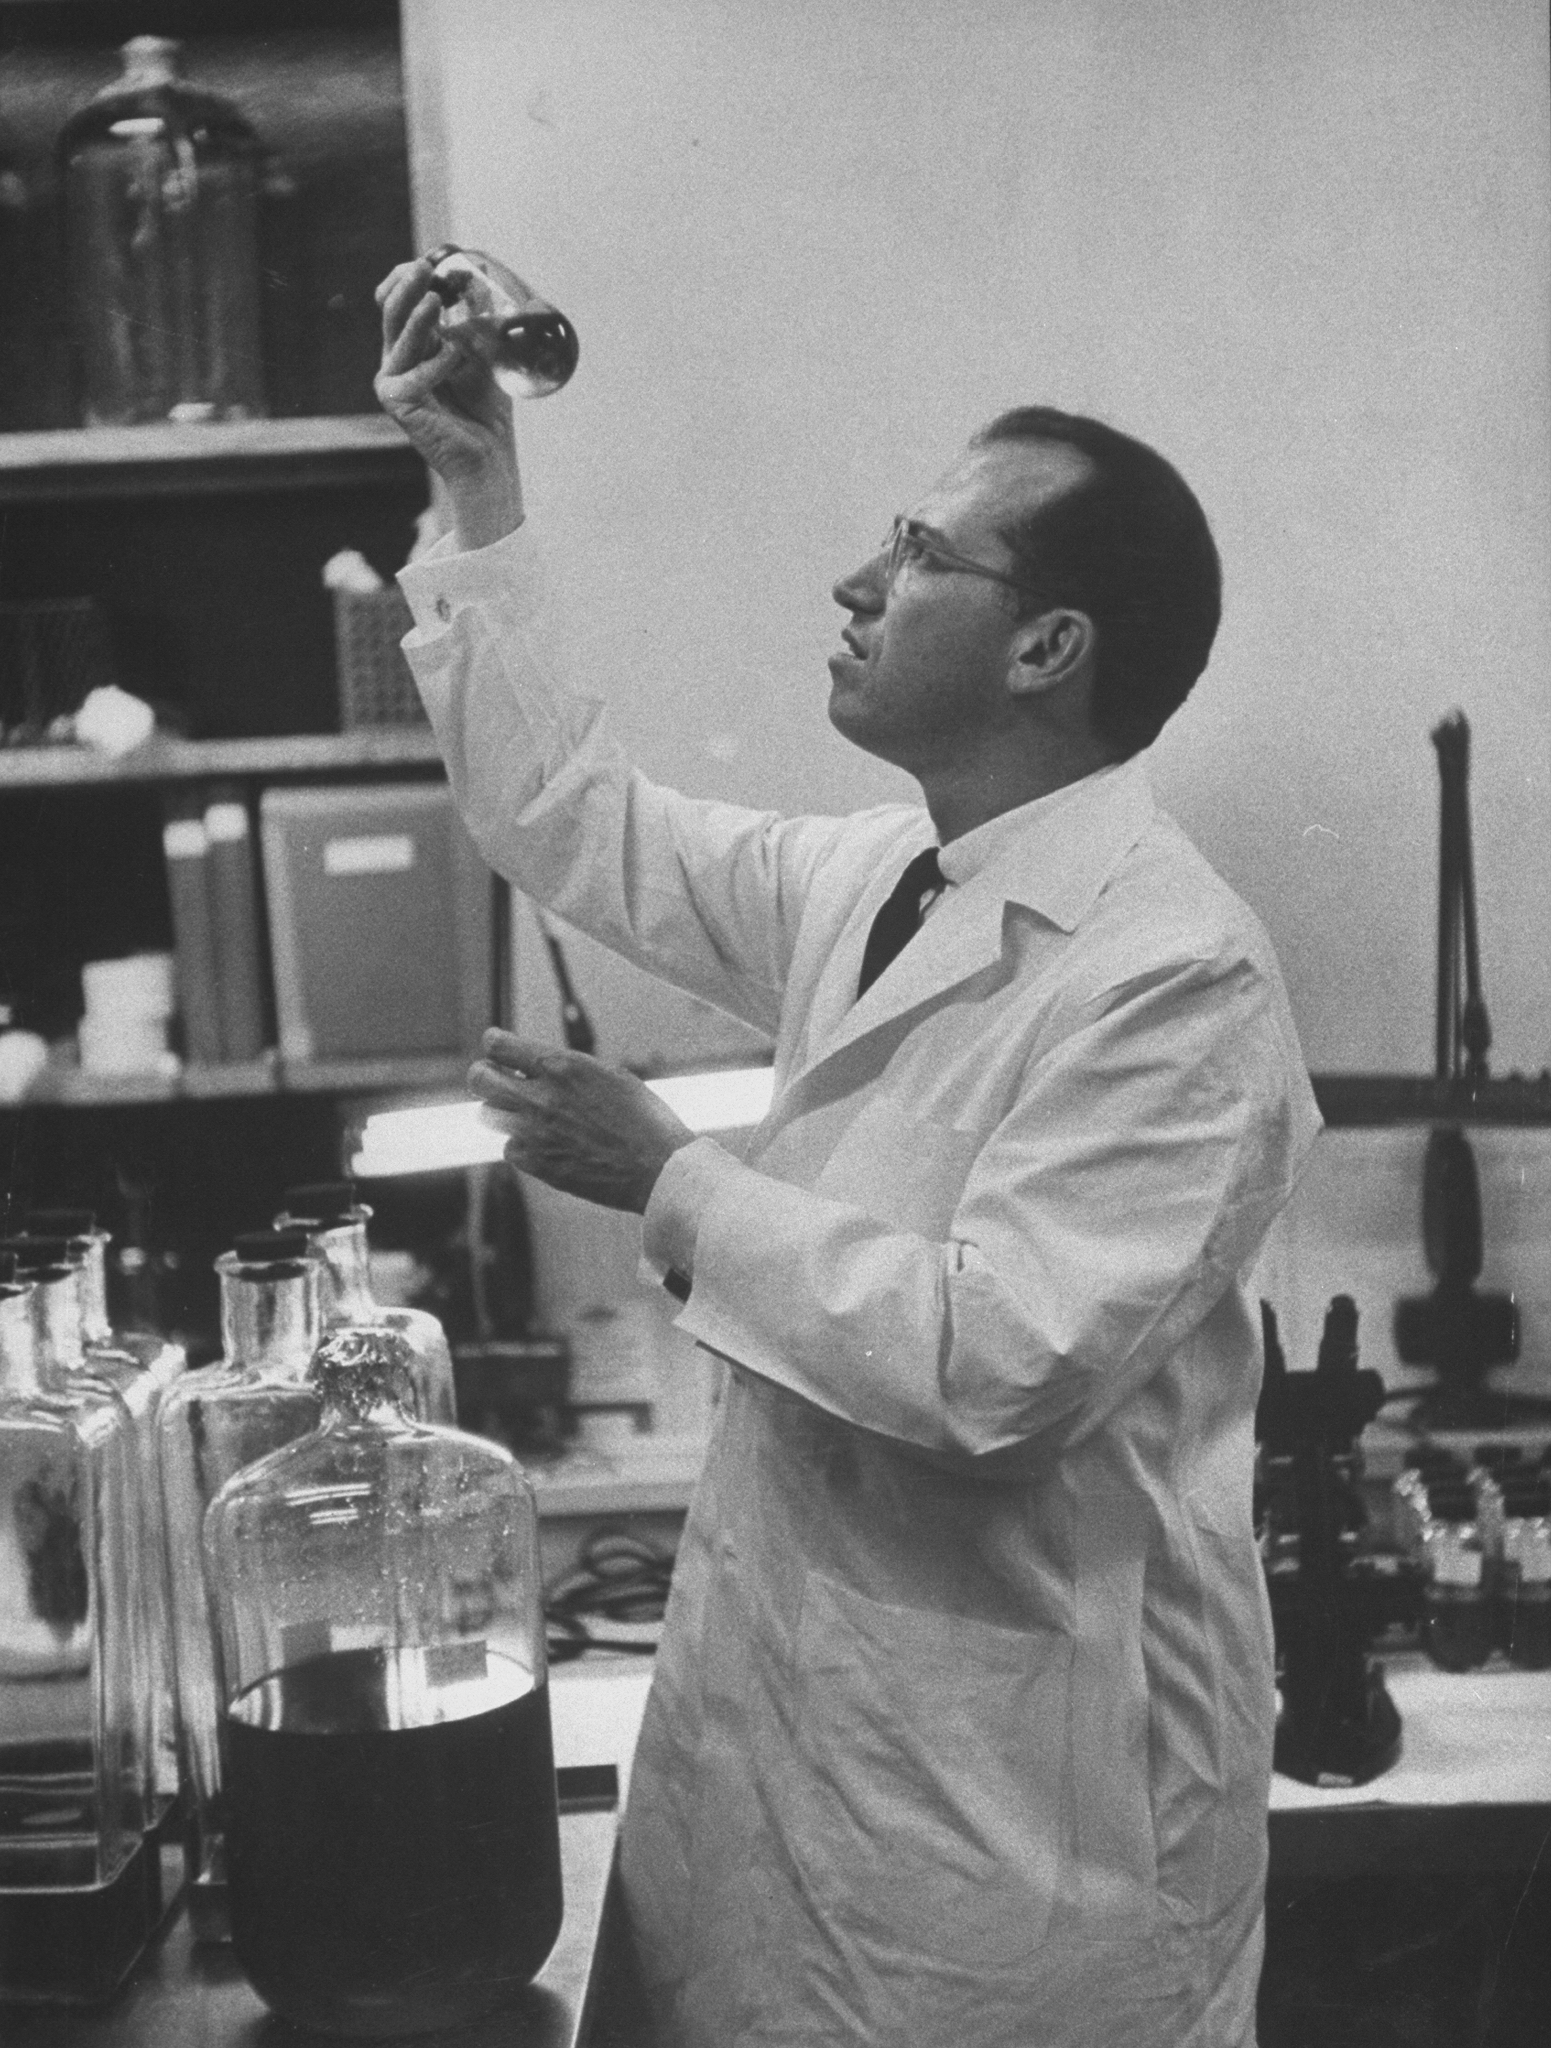 Jonas Salk in 1955, the year his polio vaccine was proven effective